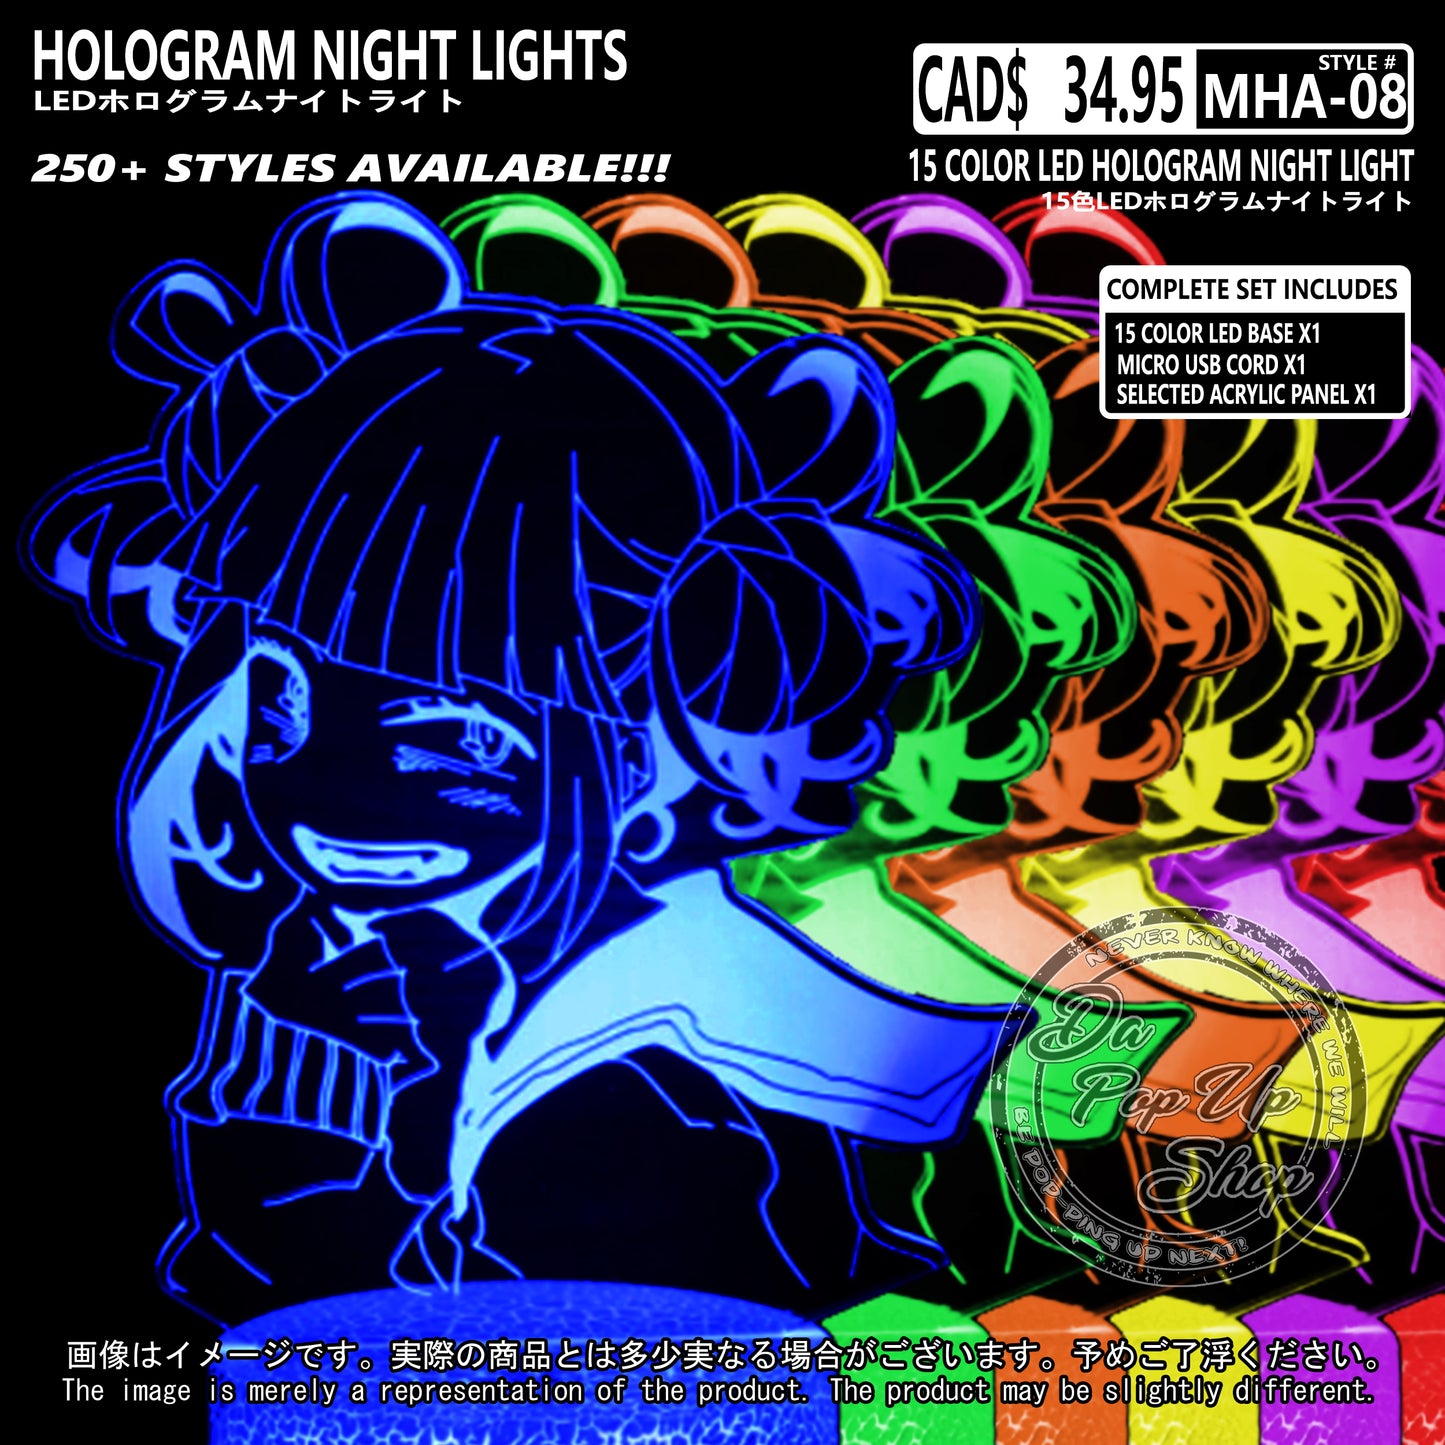 (MHA-08) My Hero Academia Hologram LED Night Light